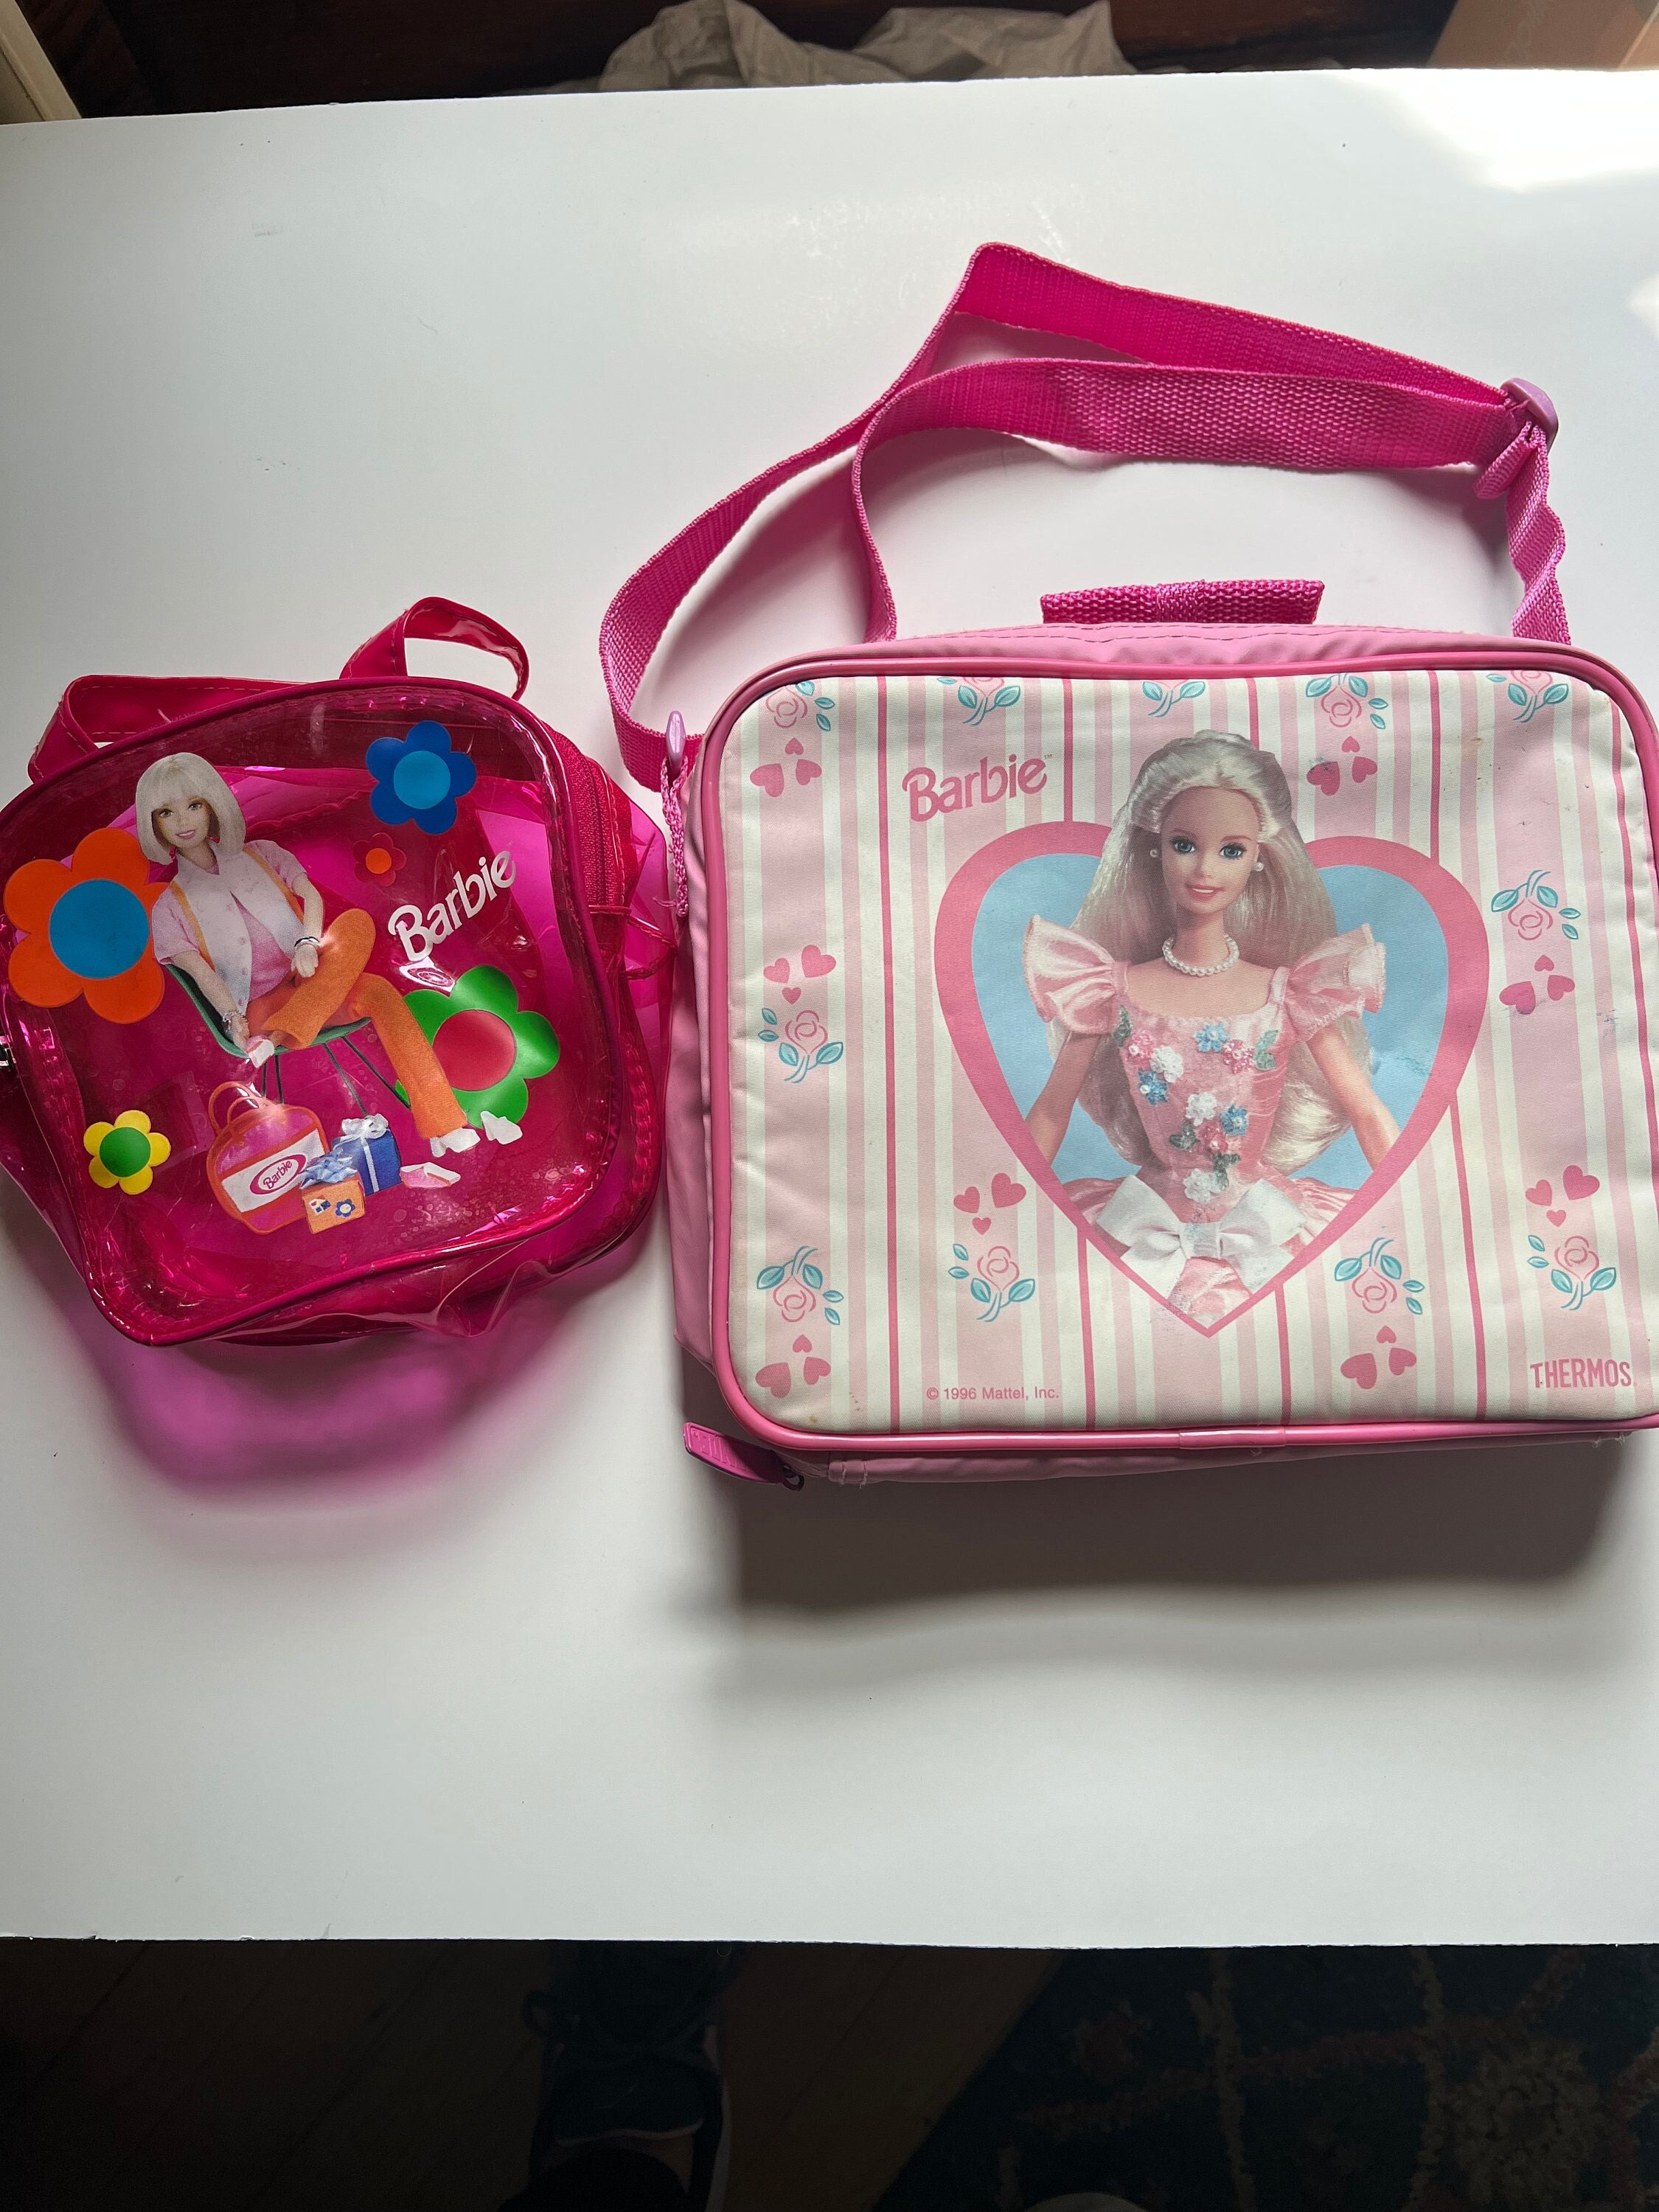 Mattel Games - Barbie Lunch Bag  Buy at Best Price from Mumzworld